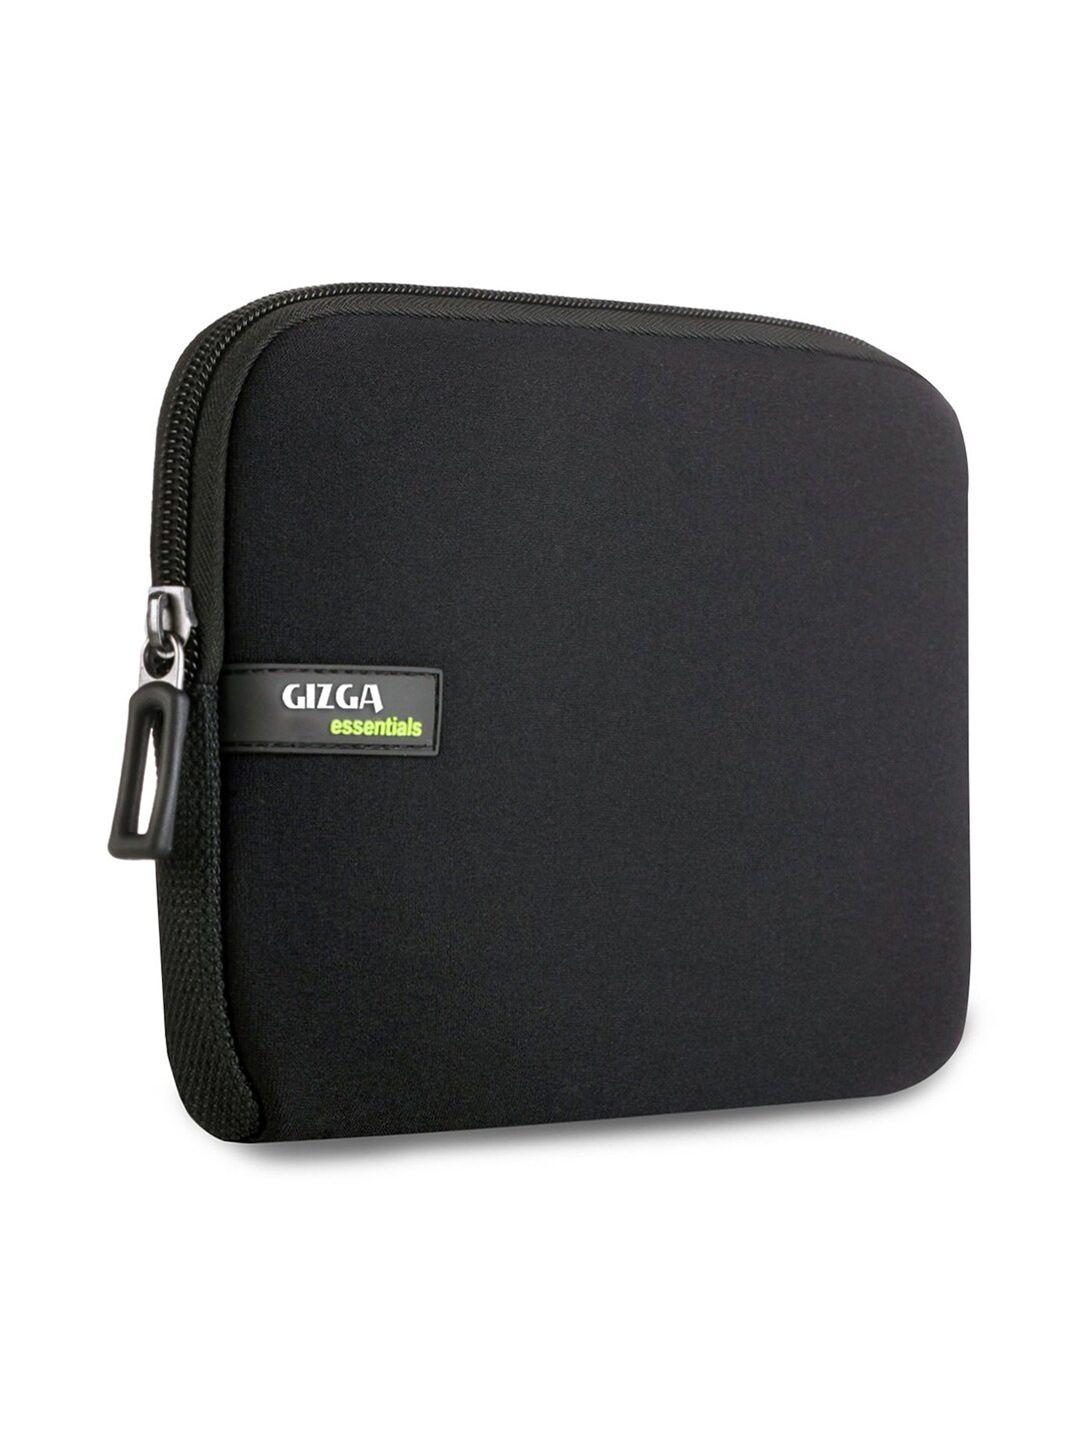 gizga essentials soft inner lining 8 inch laptop sleeve